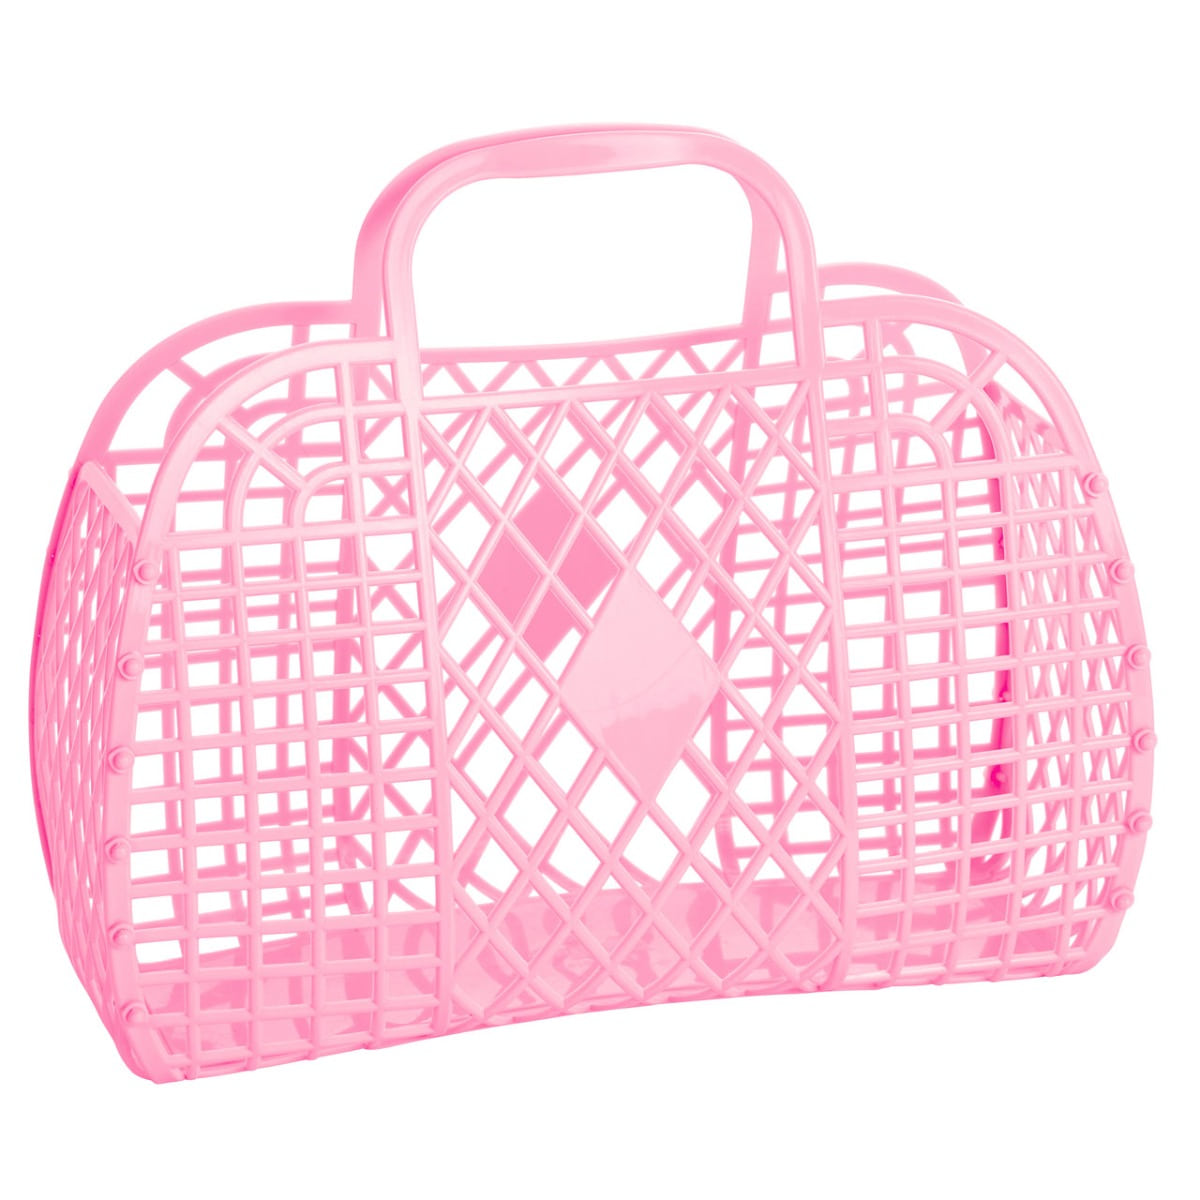 RETRO BASKET - Large ,Small-Bubblegum Pink (사이즈선택가능)